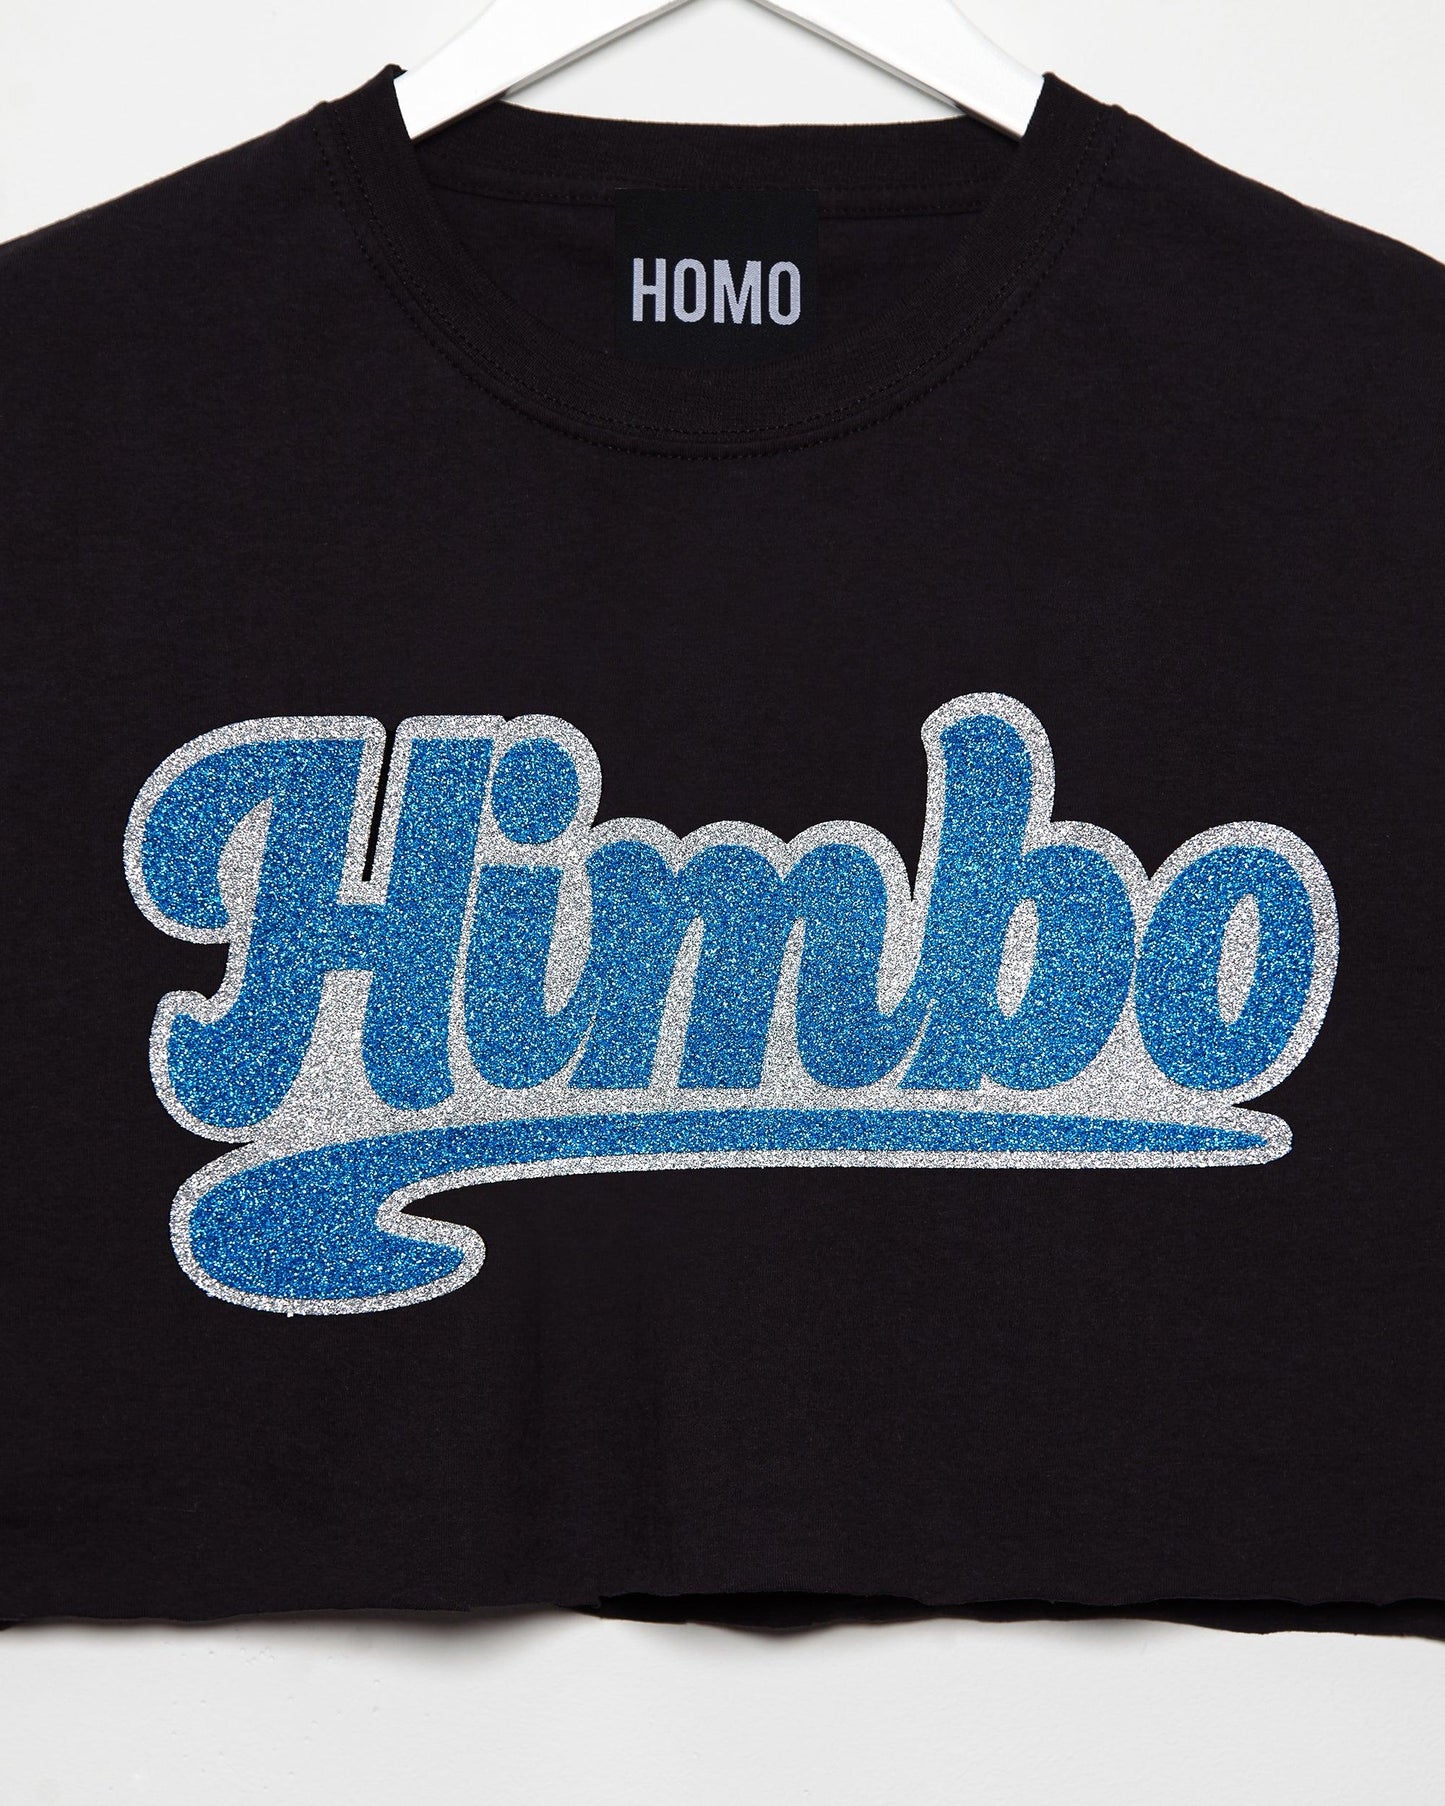 Himbo, blue/silver glitter on black - Sleeveless crop-top.